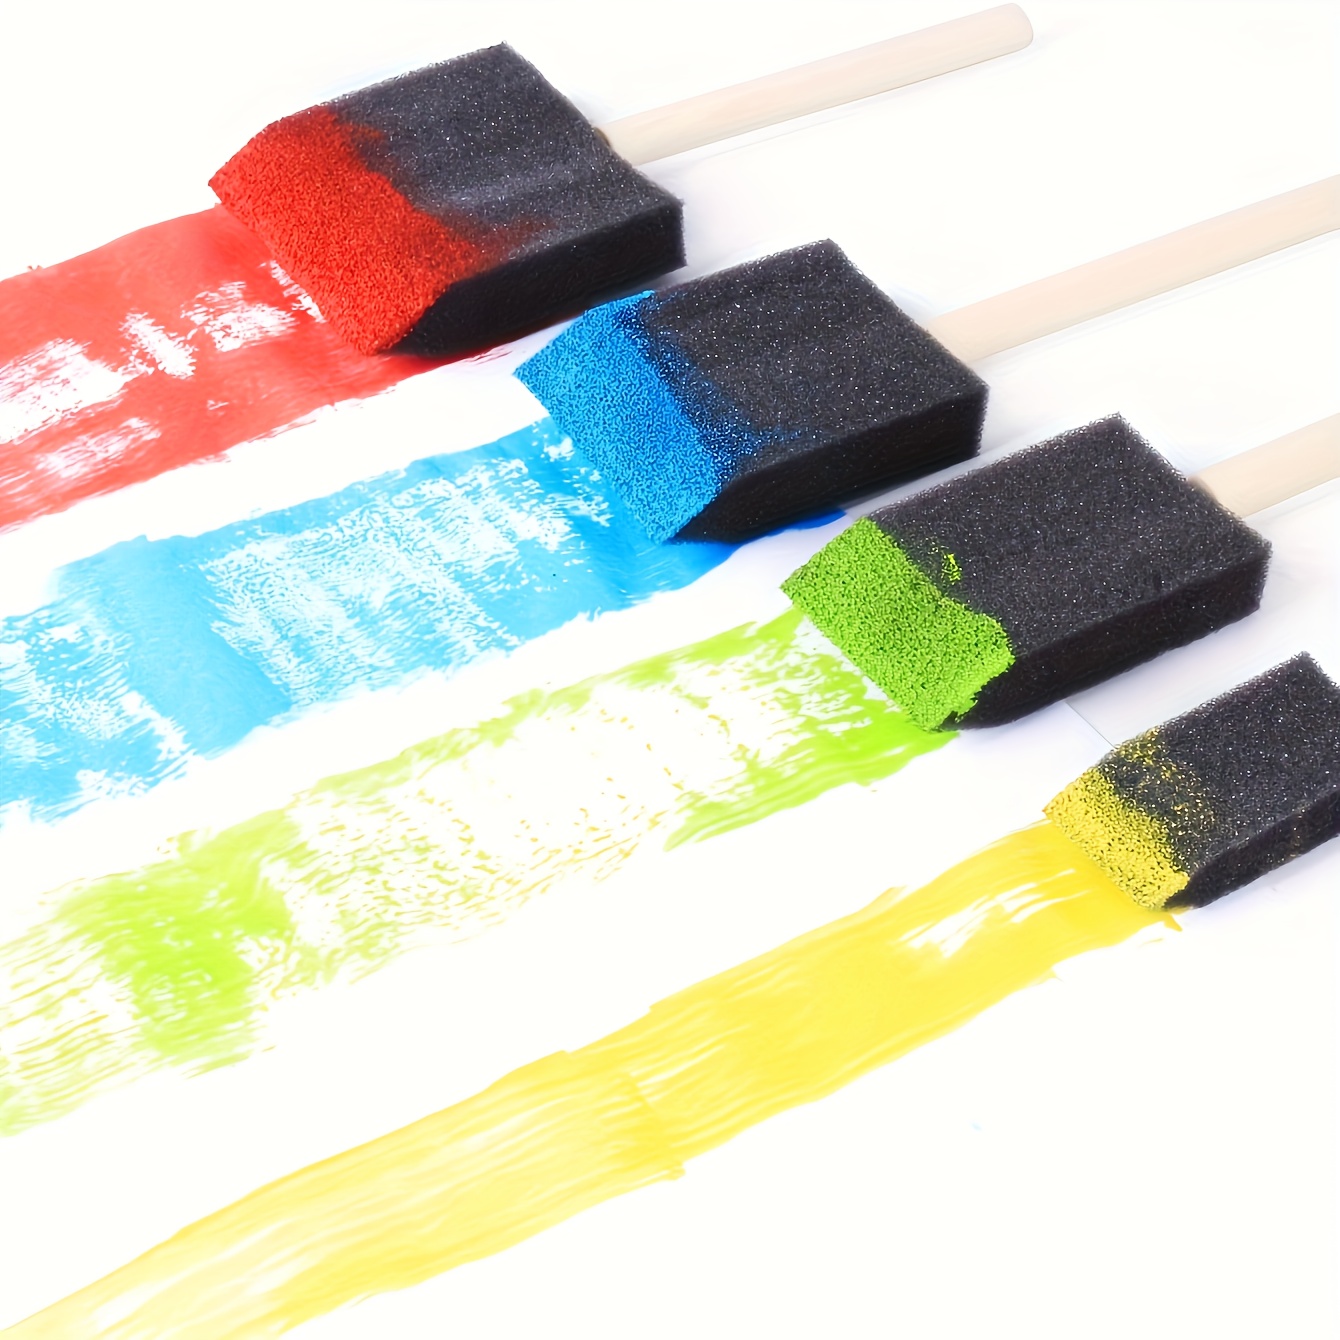 4pcs Wooden Handle Paint Sponge Brush Set, Simple Multi-purpose Paint Brush  For Kid DIY Paint Craft Painting